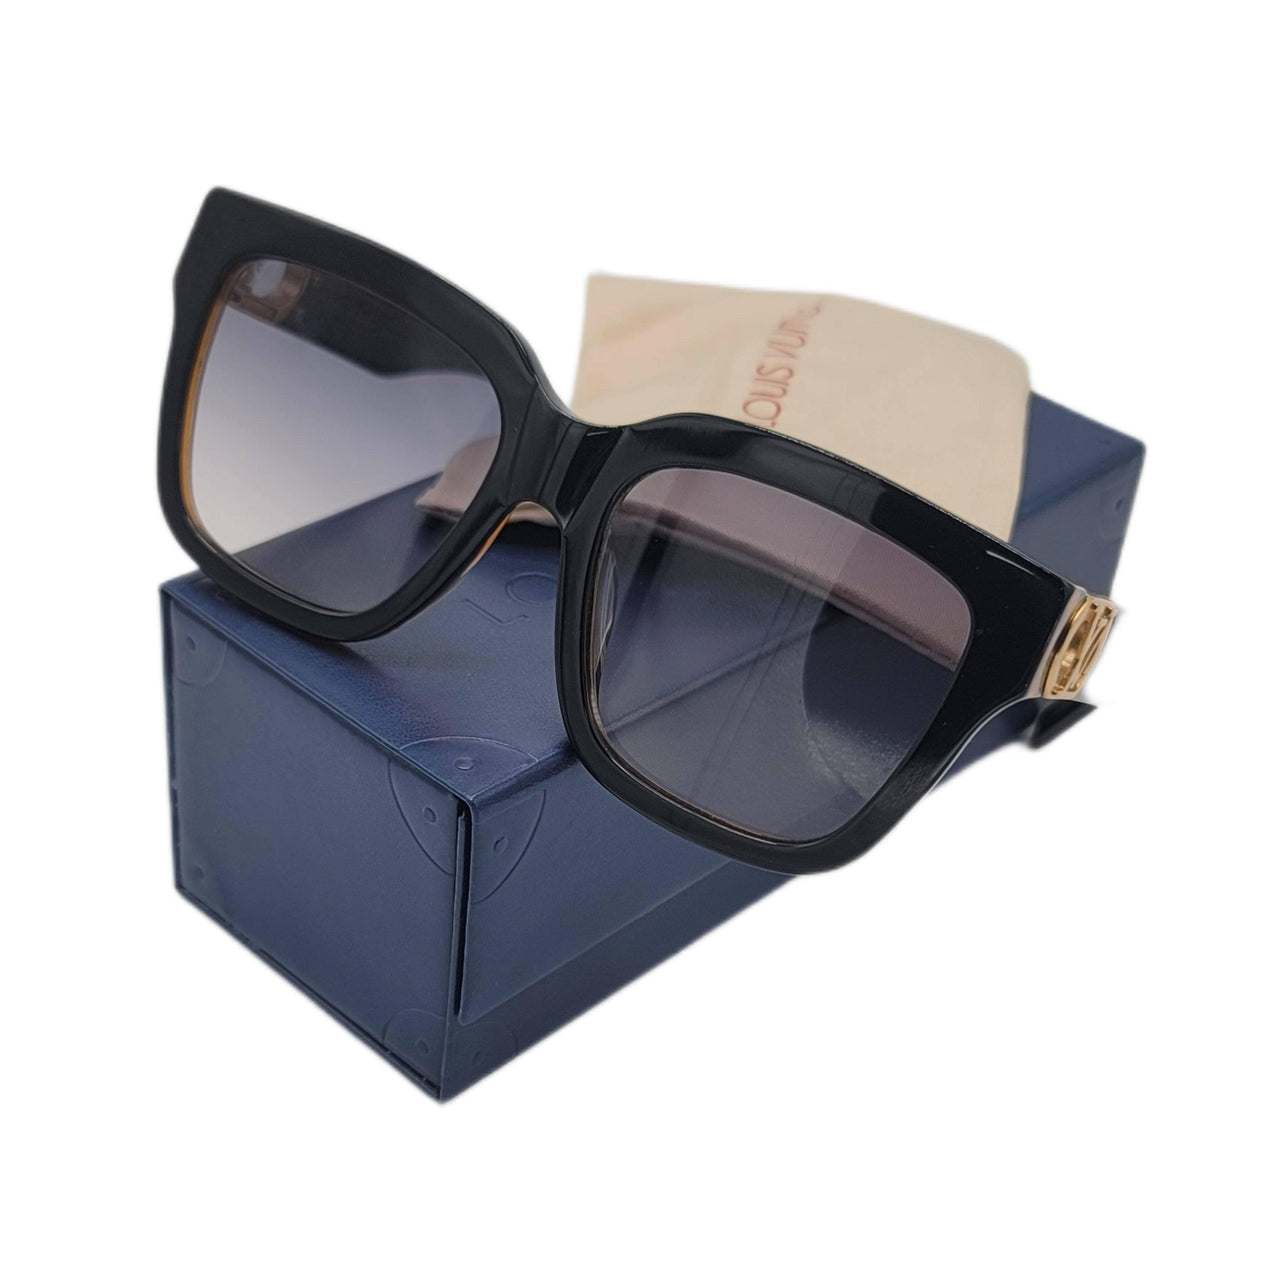 The Bag Couture Sunglasses LV Sunglasses 2